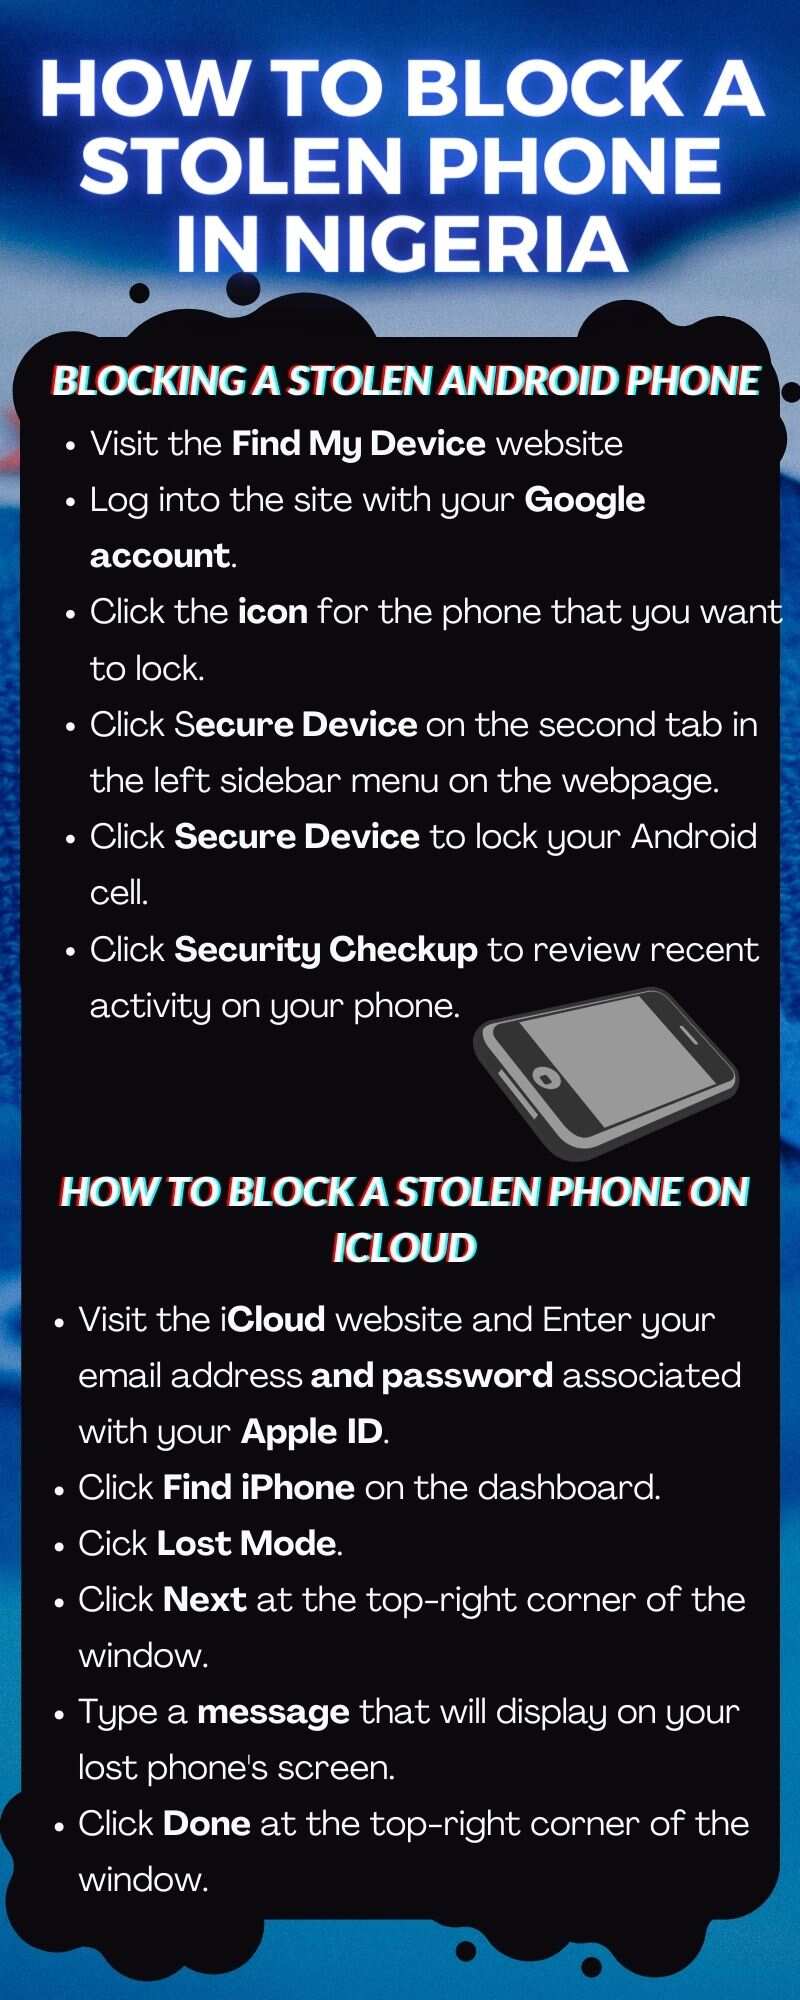 How to block a stolen phone in Nigeria